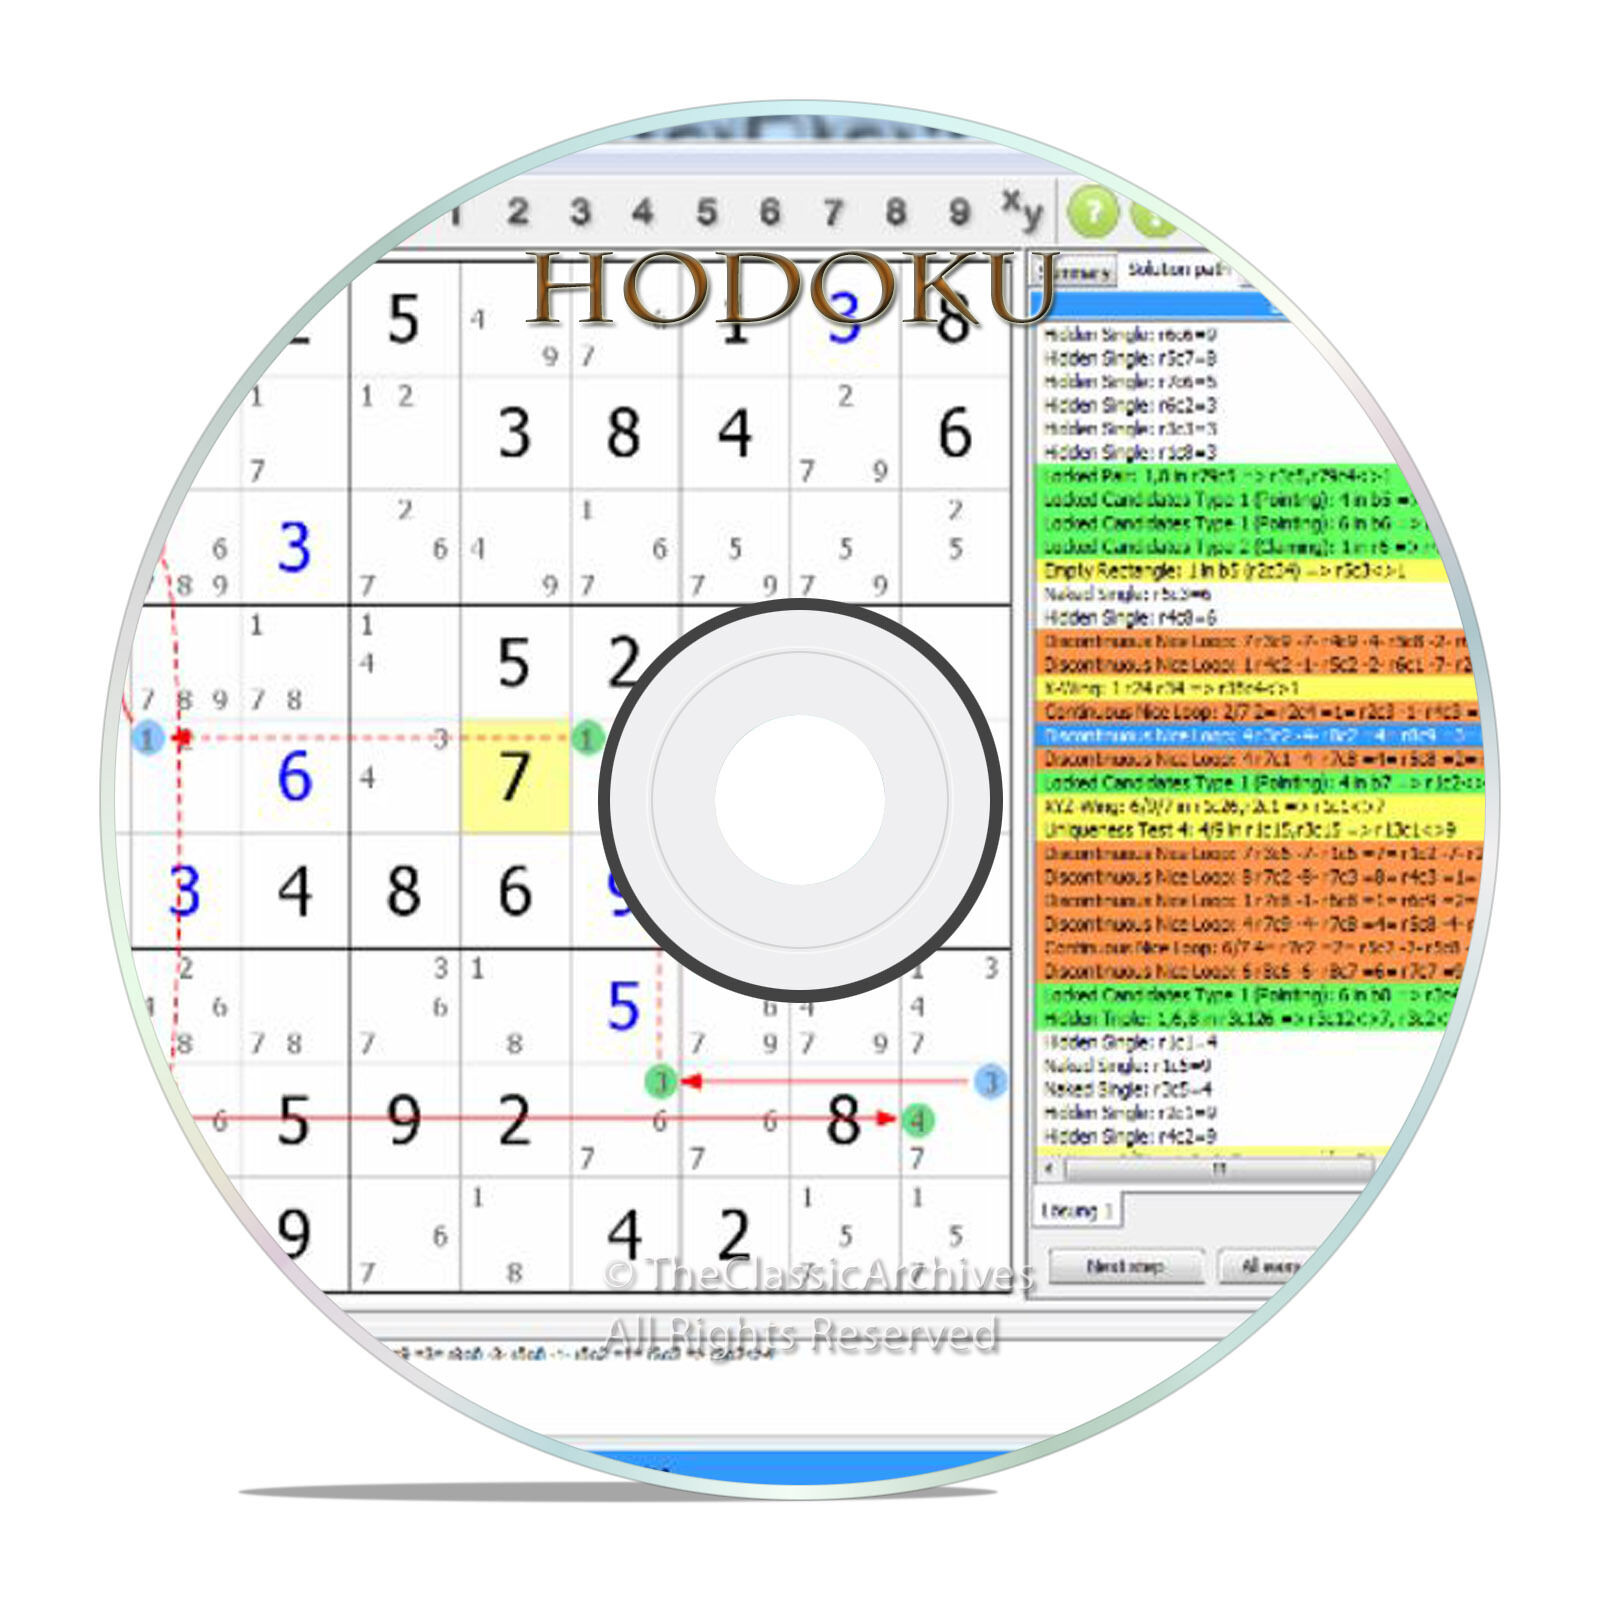 HODOKU, A SUDOKU TRAINING GAME, BRAIN TWISTER FOR THE PC, WITH BONUS GAMES